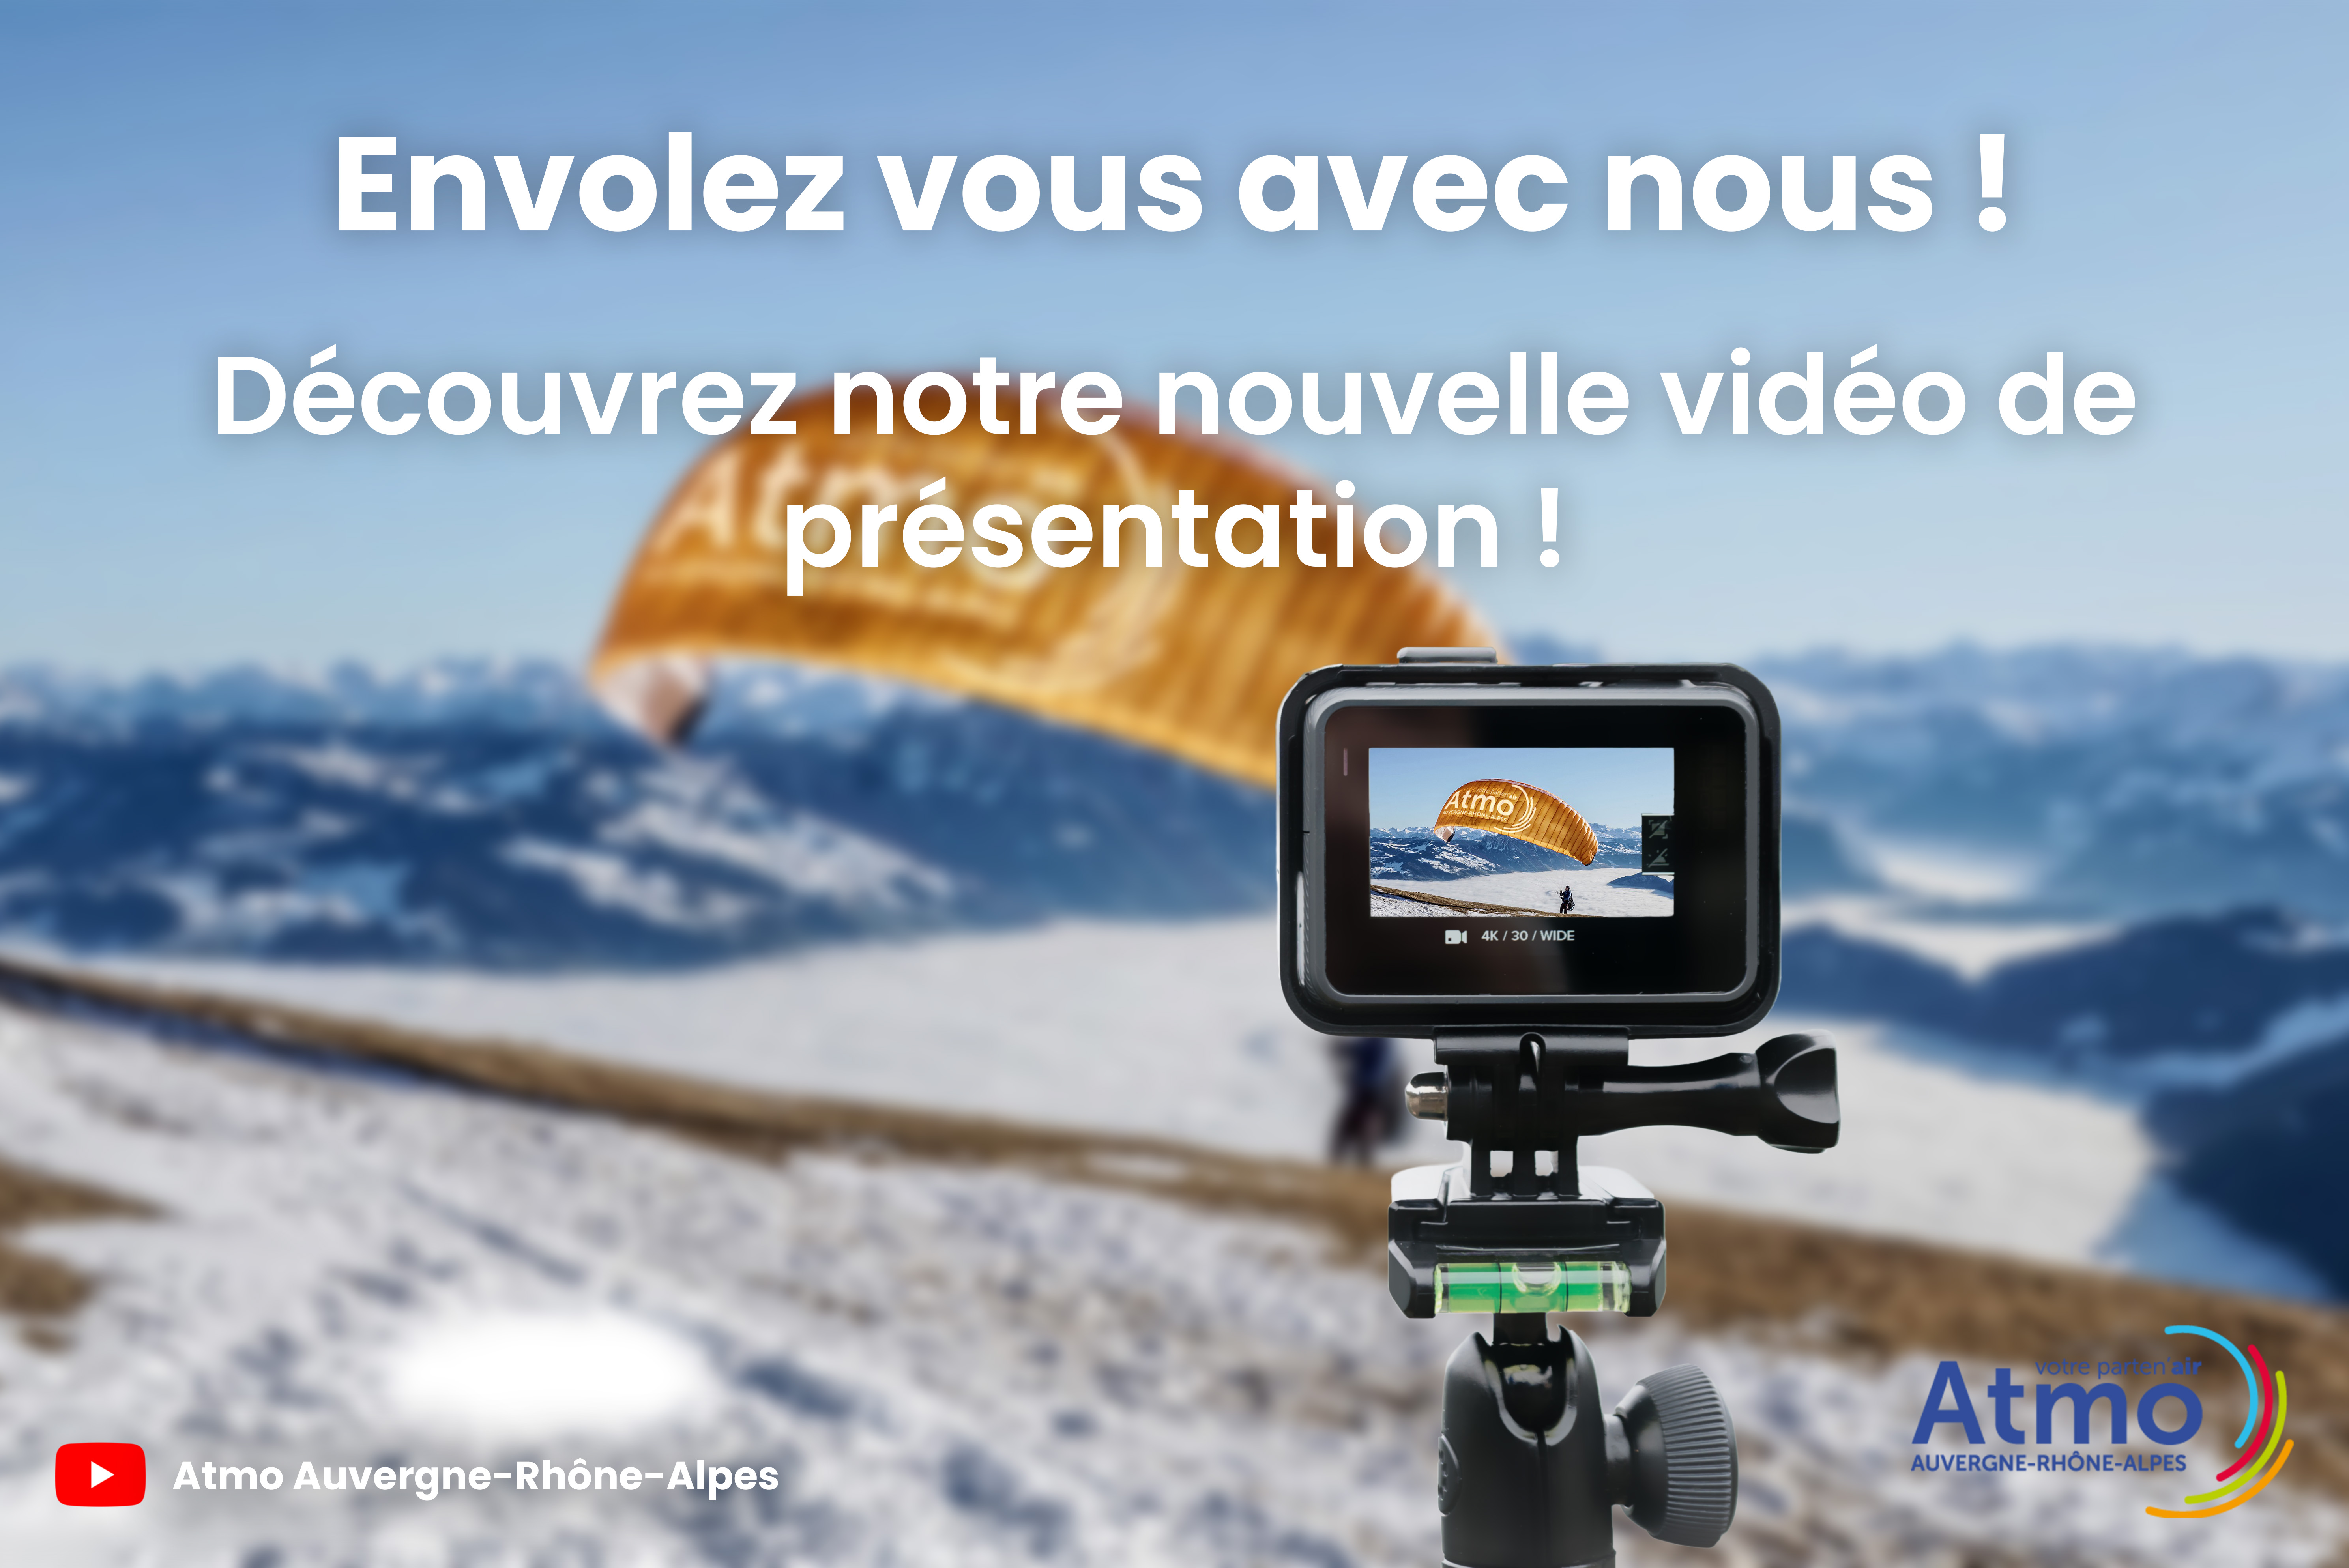 Pop up vidéo présentation Atmo Auvergne-Rhône-Alpes